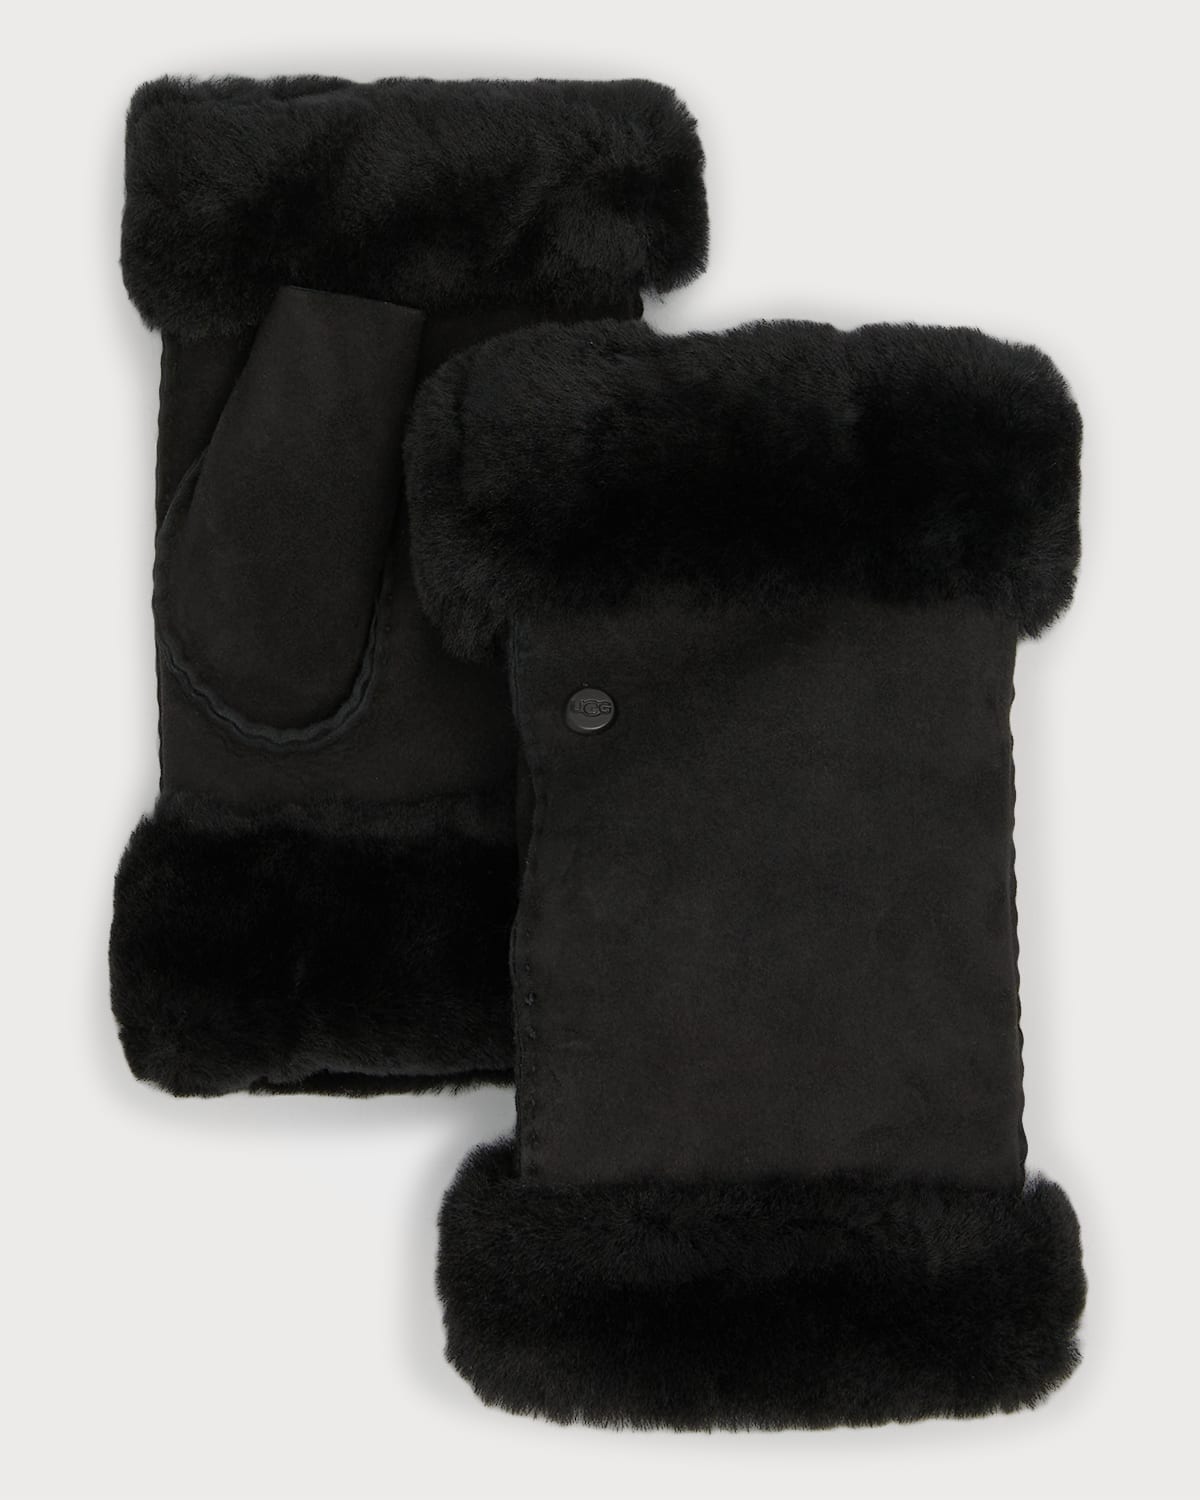 Halfboy Wool Fingerless Gloves Neiman Marcus 5349